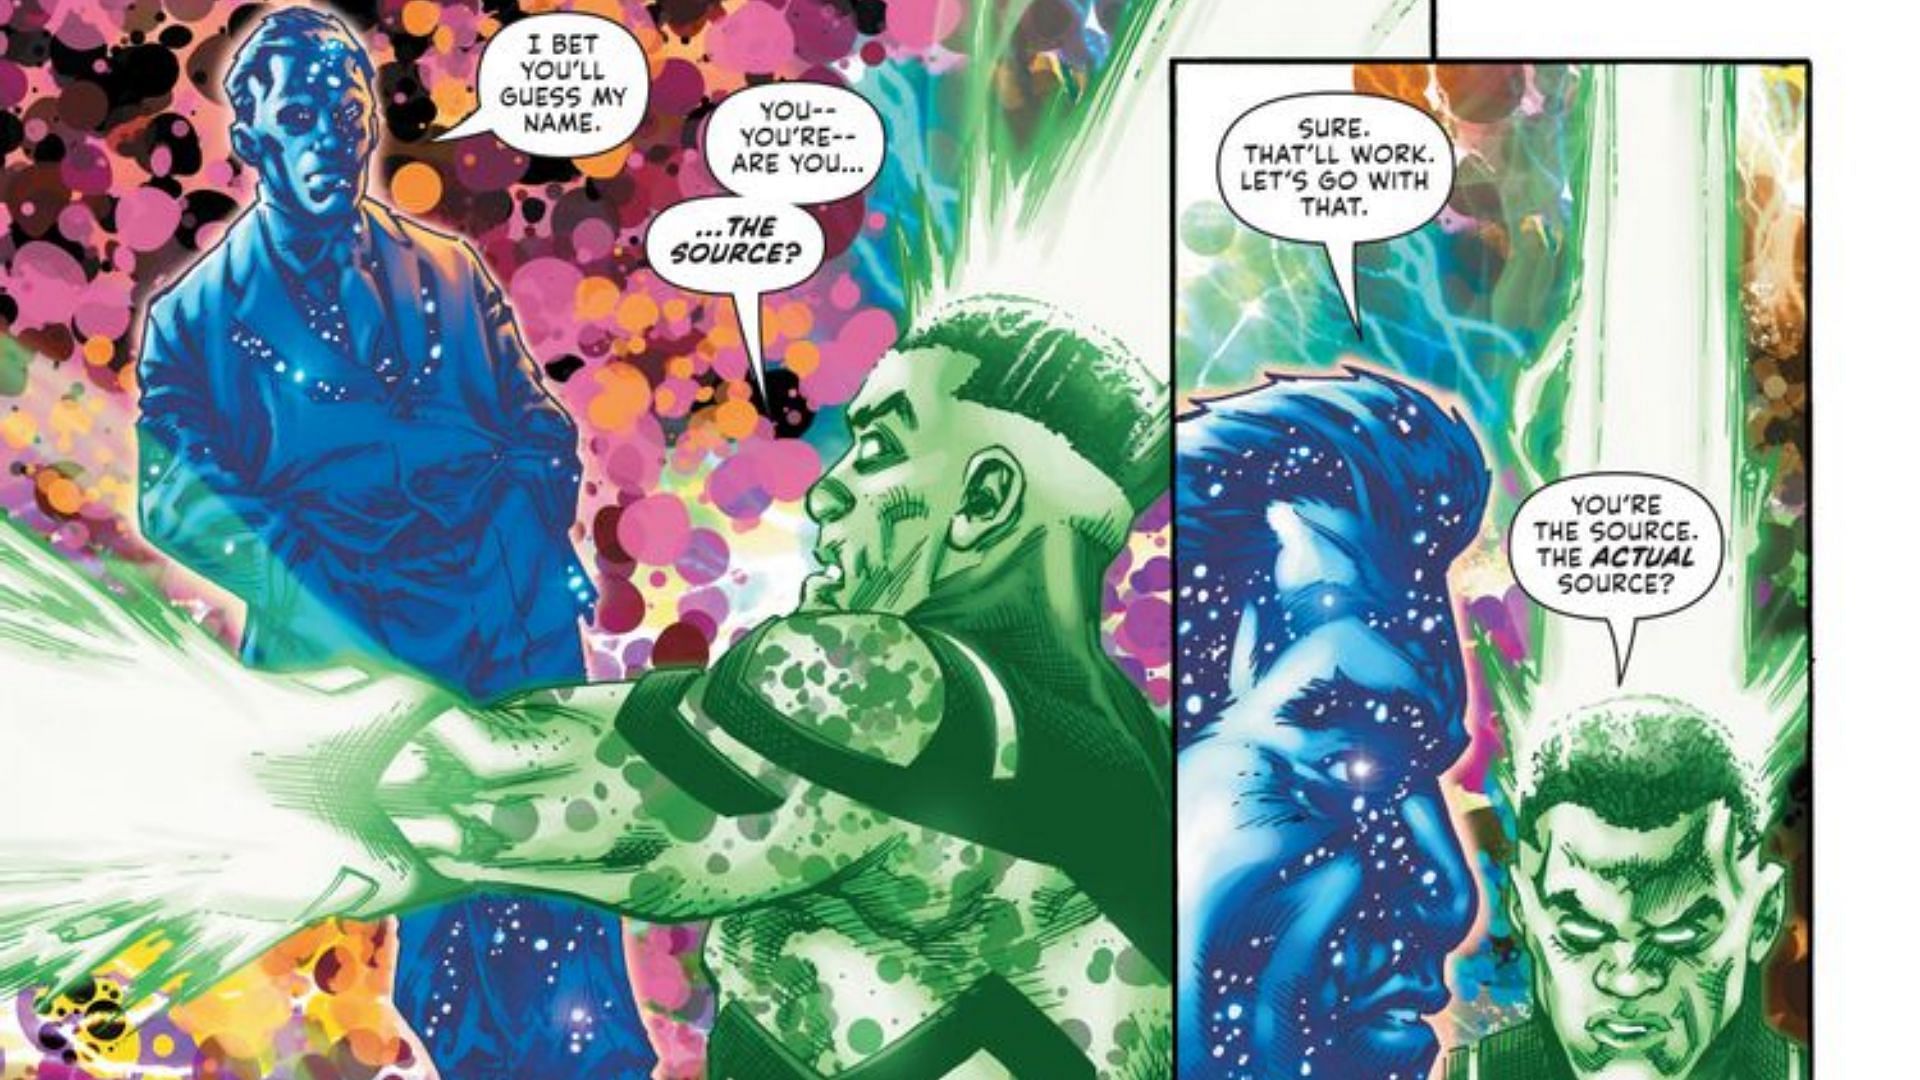 The Source in Green Lantern #12 (Image via DC Comics)